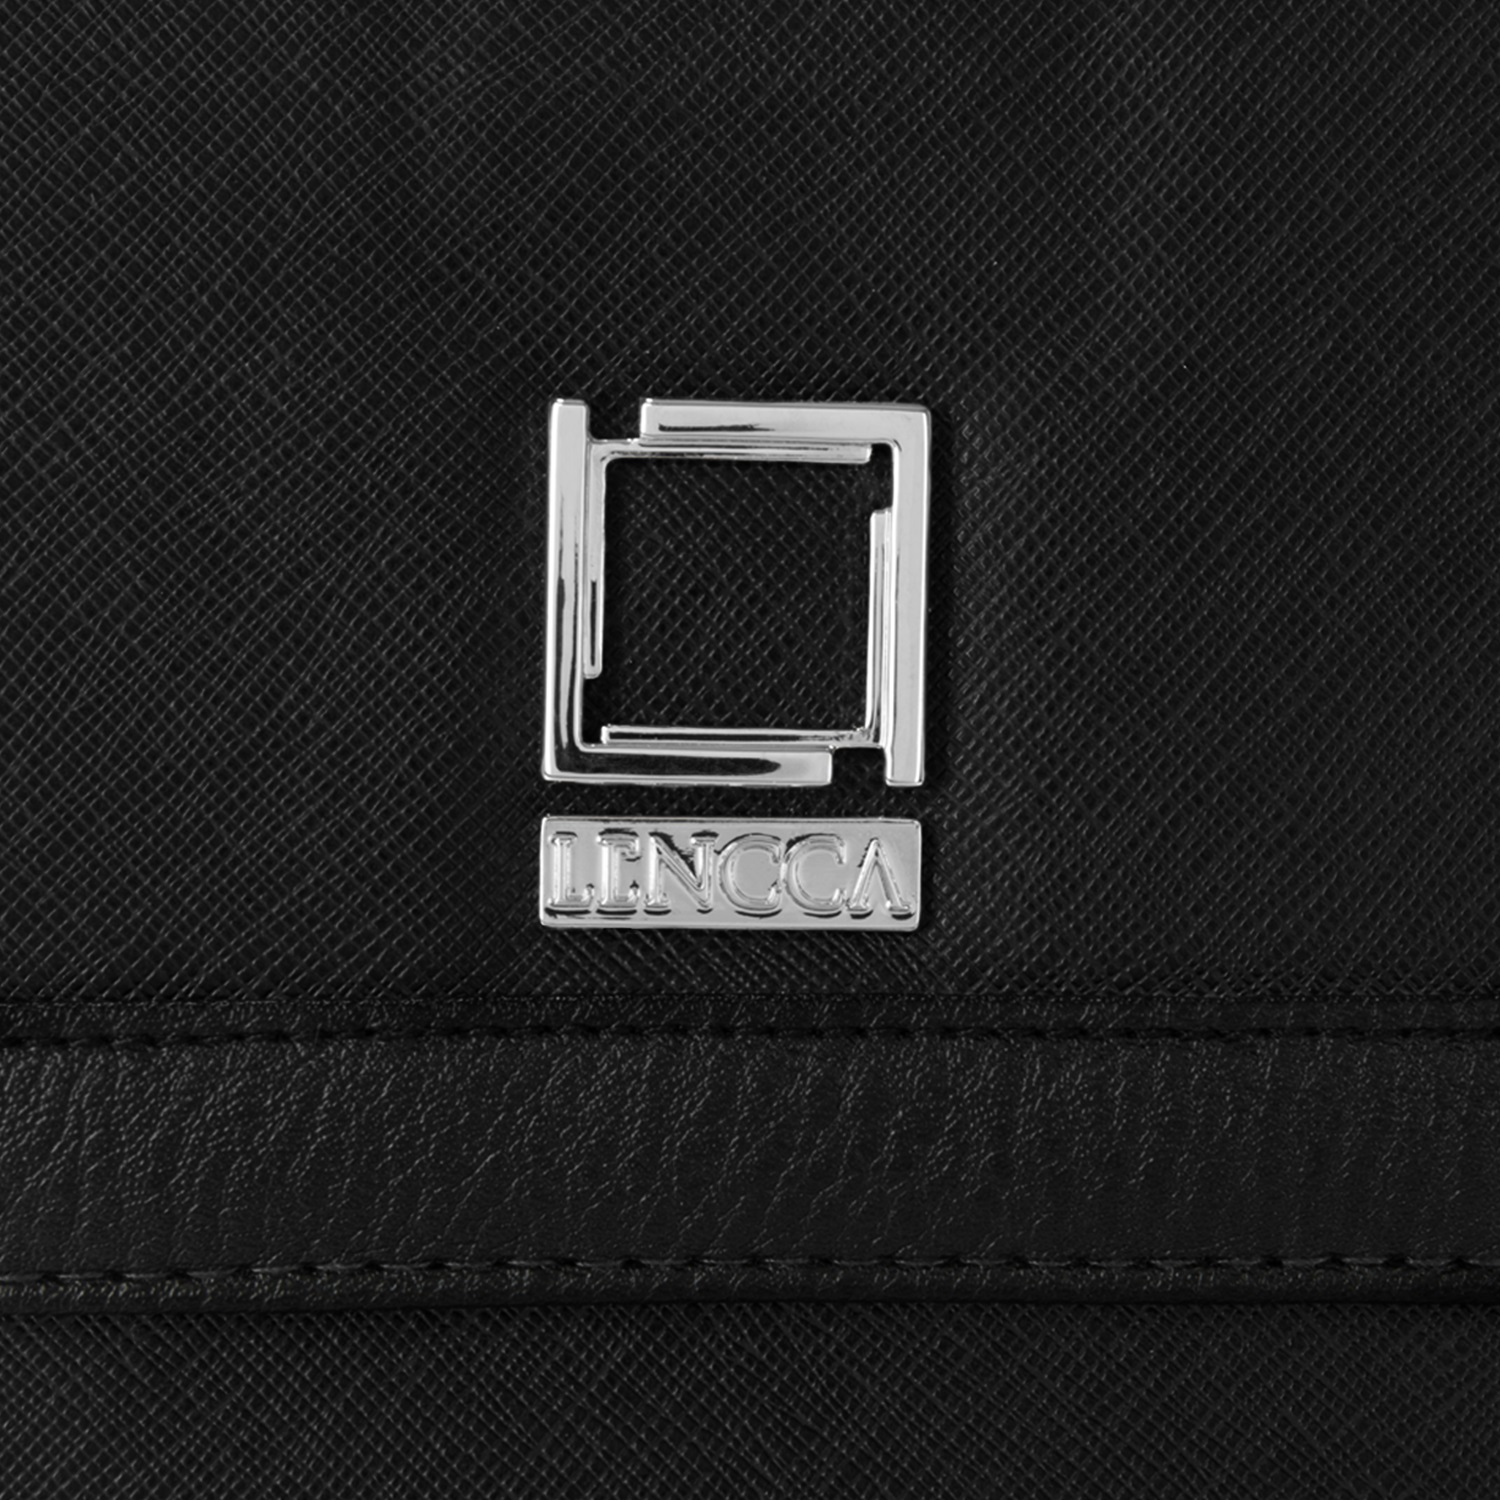 Lencca Nikina Woman’s Clutch Crossbody Fashion Handbag w/ Shoulder Strap fits Alcatel Tablets up to 7.9in x 5.25in